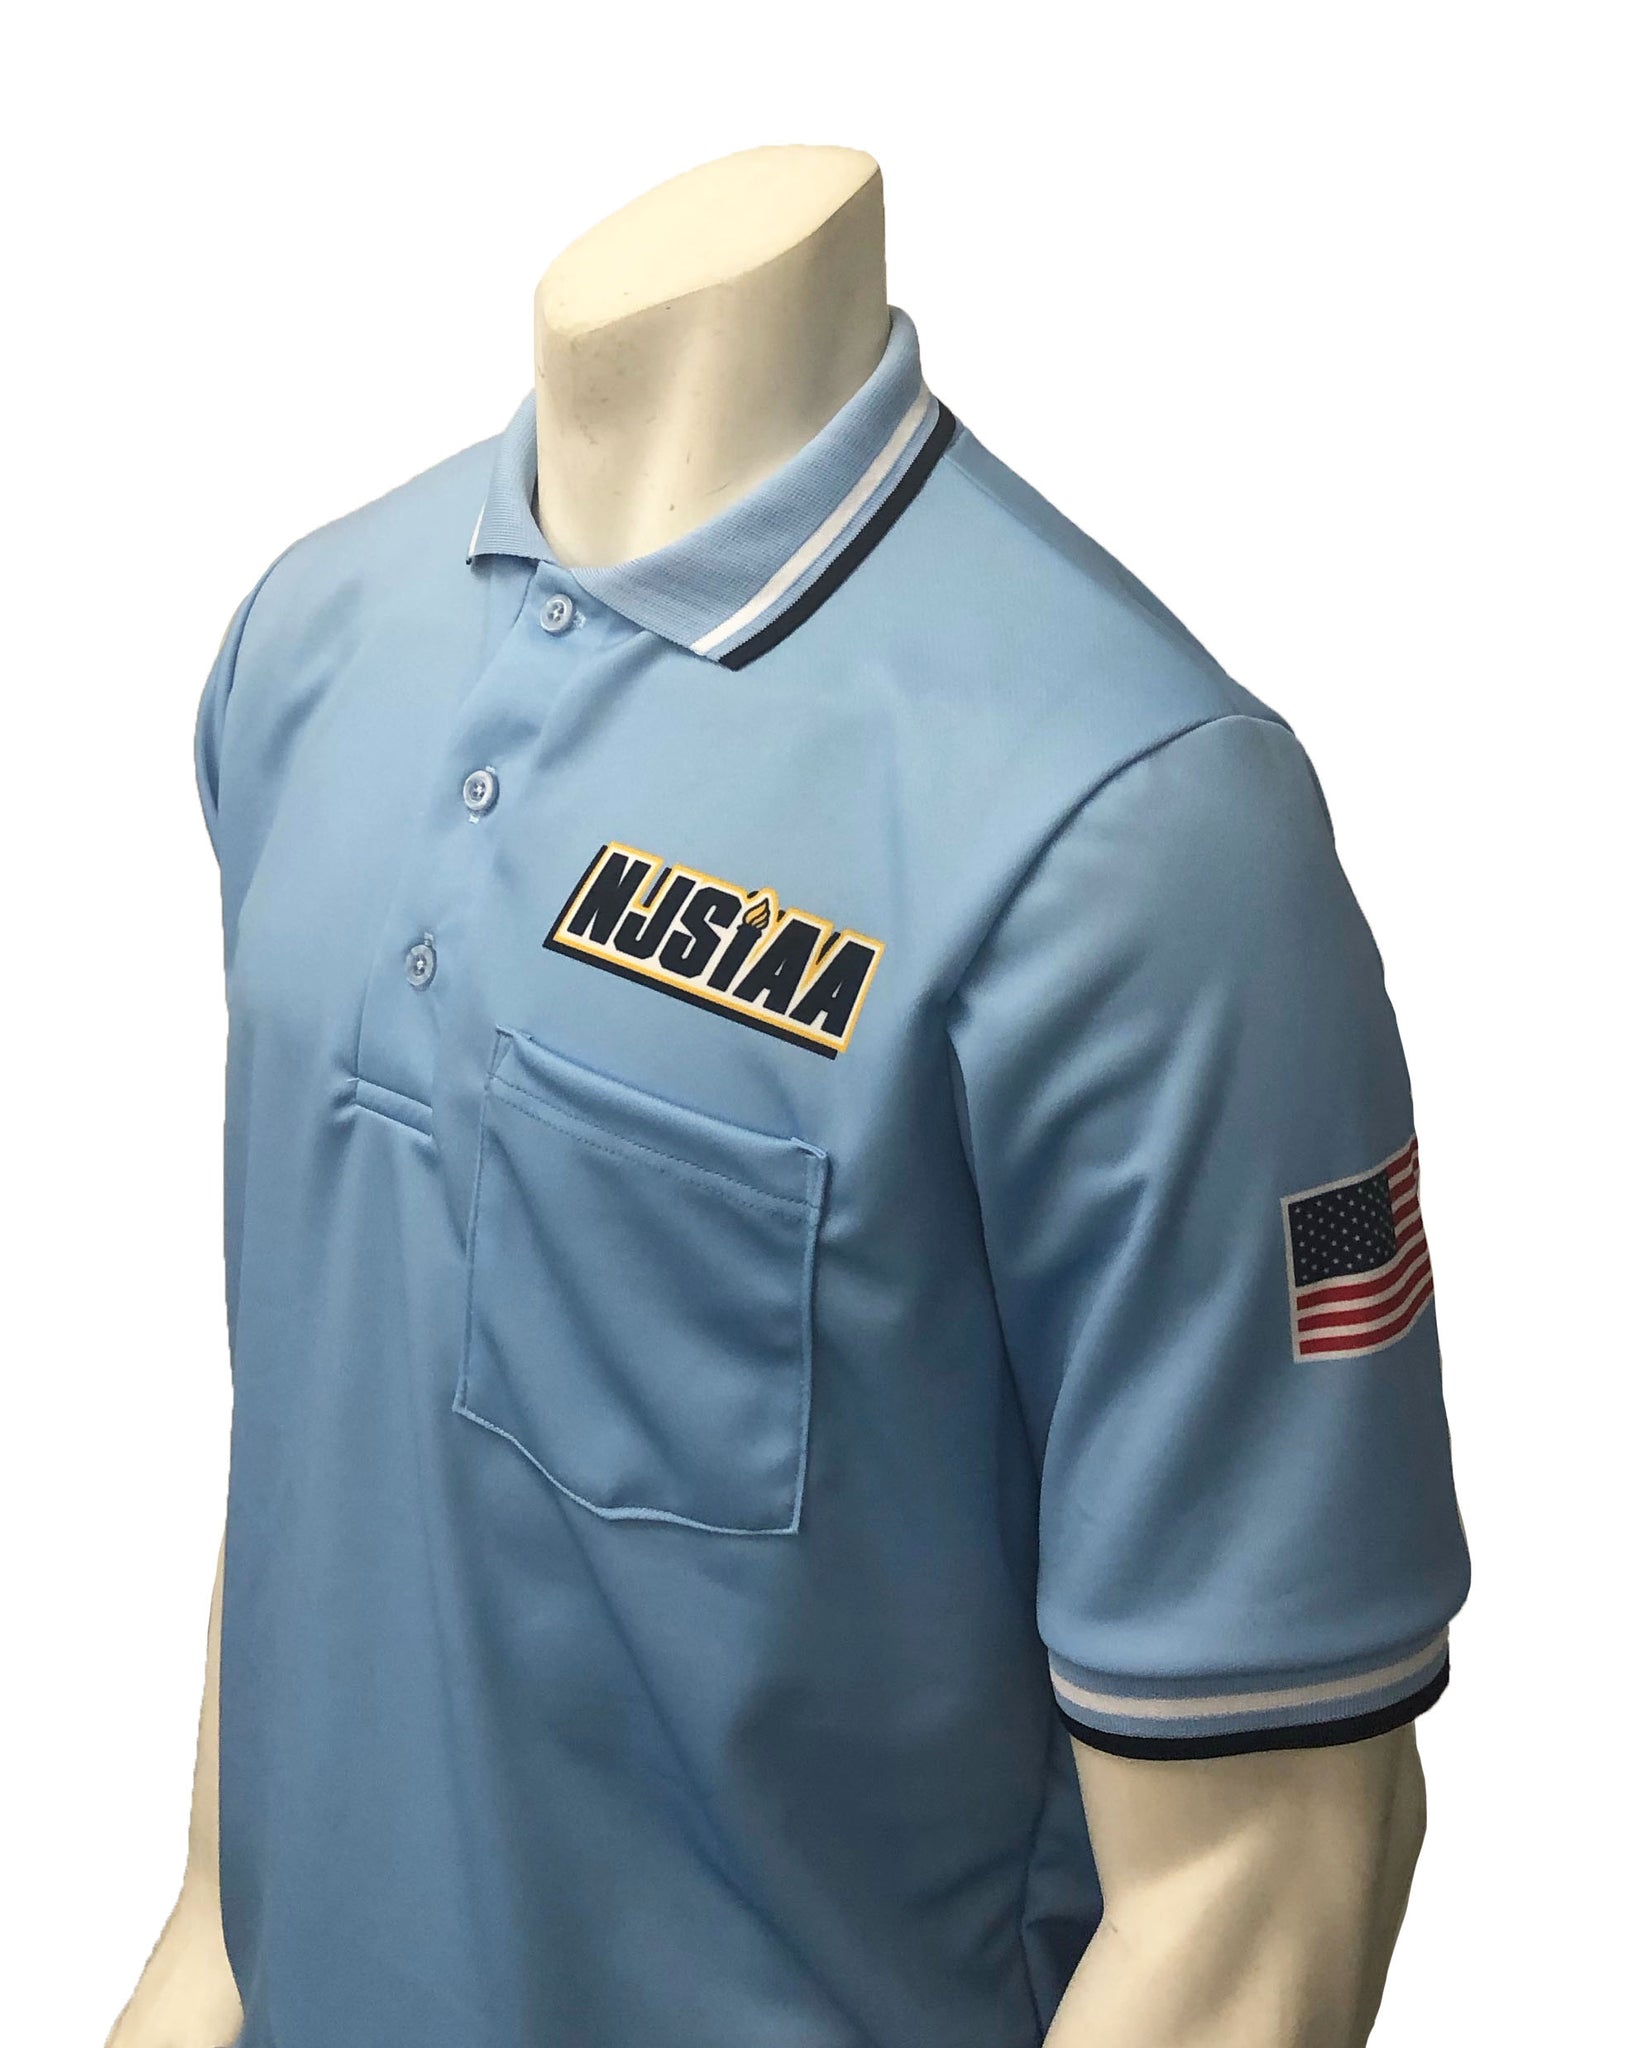 USA300NJ-PB - Smitty "Made in USA" - NJSIAA Men's Baseball/Softball Umpire Short Sleeve Shirt - Powder Blue